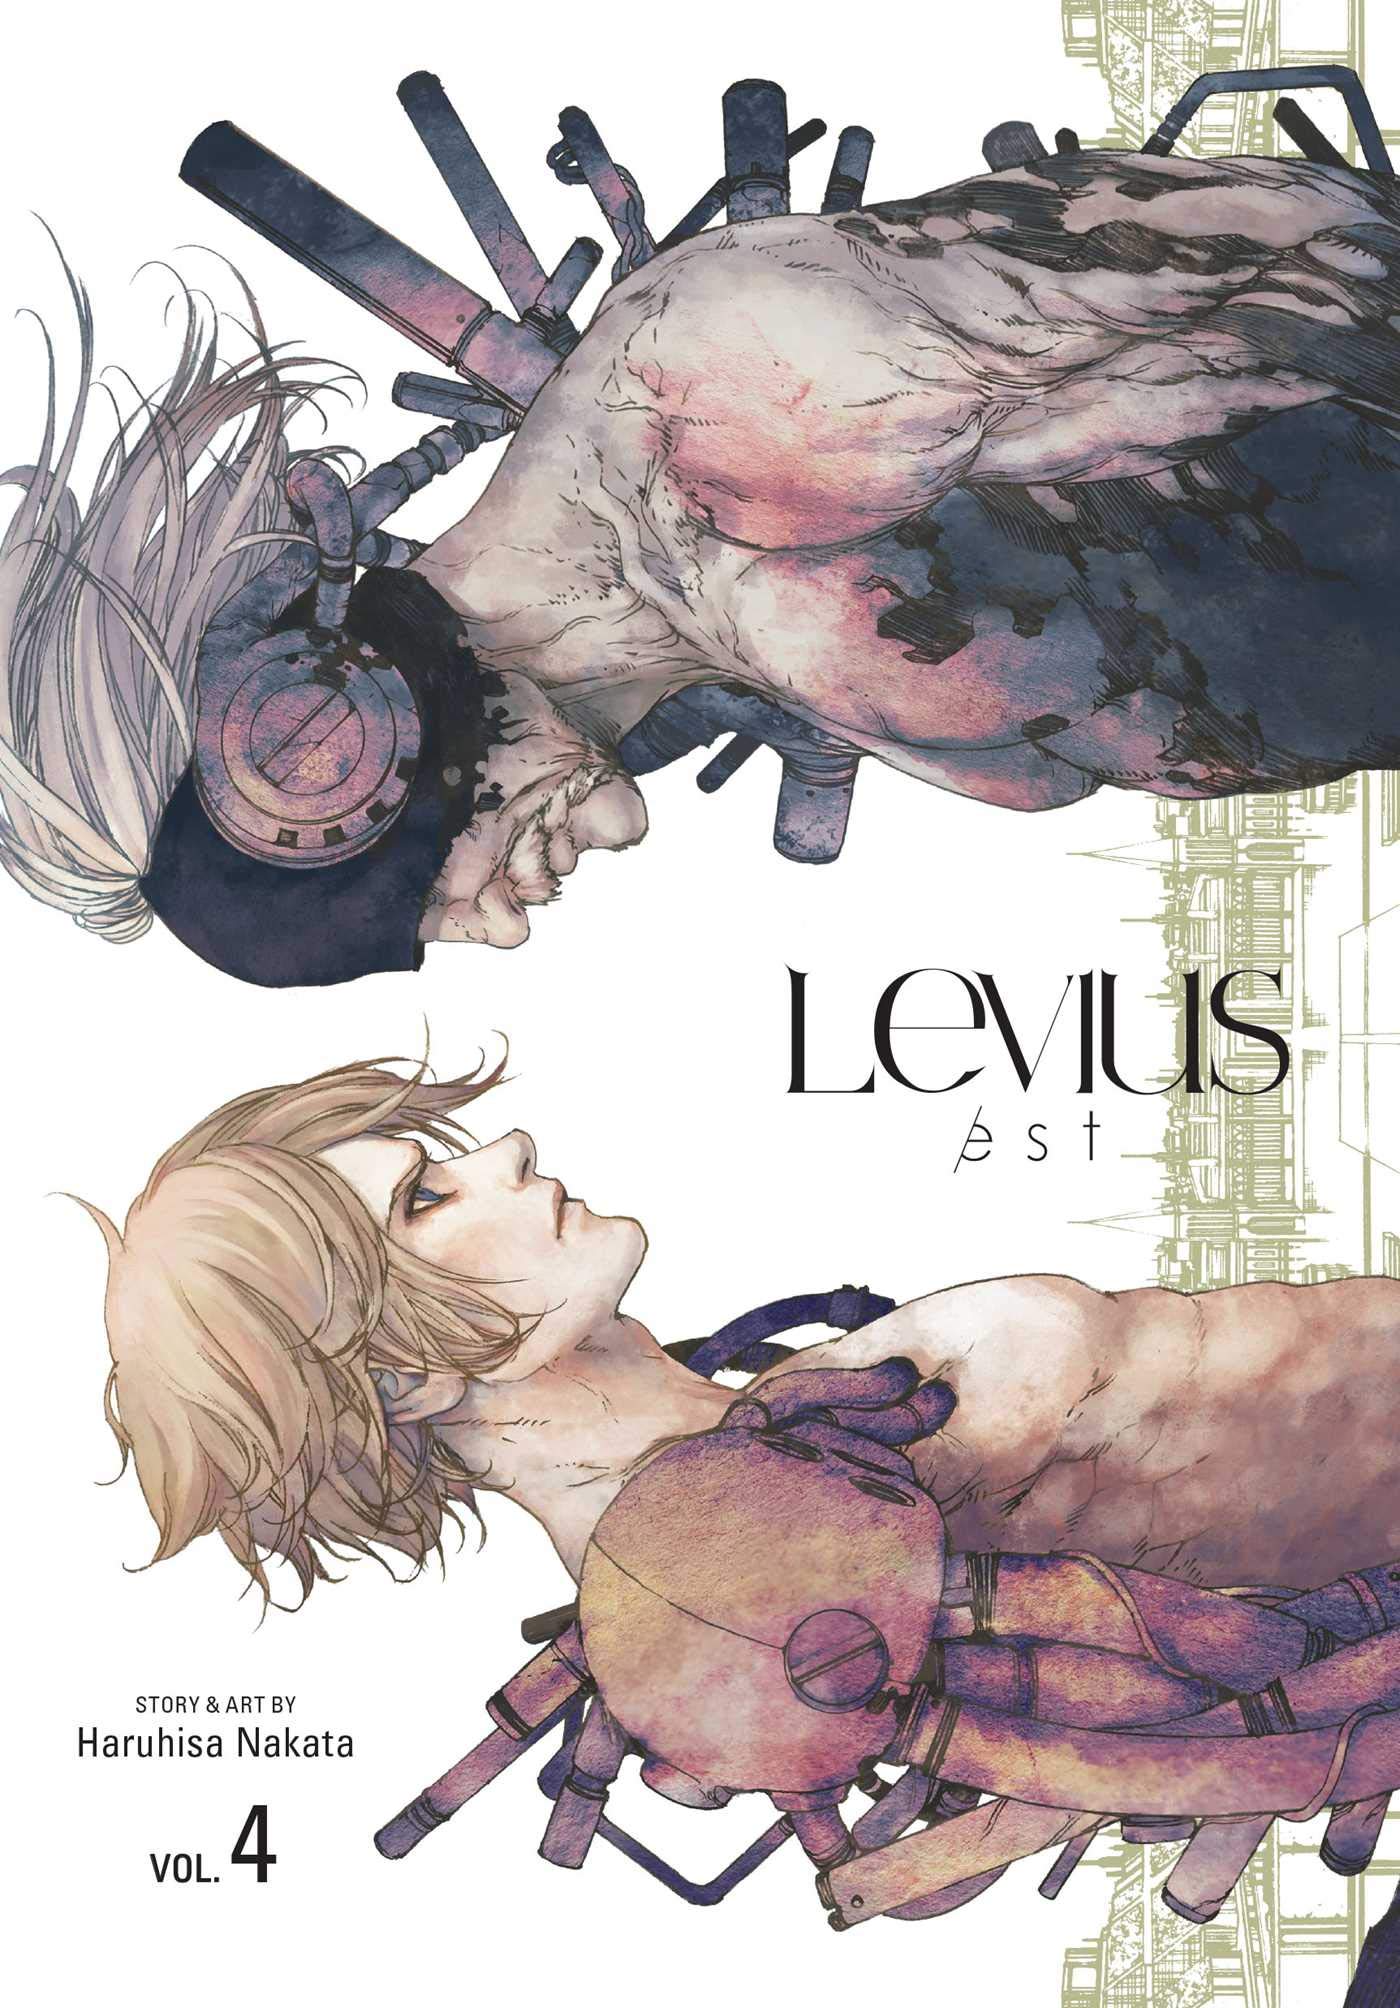 Vezi detalii pentru Levius/est - Volume 4 | Haruhisa Nakata